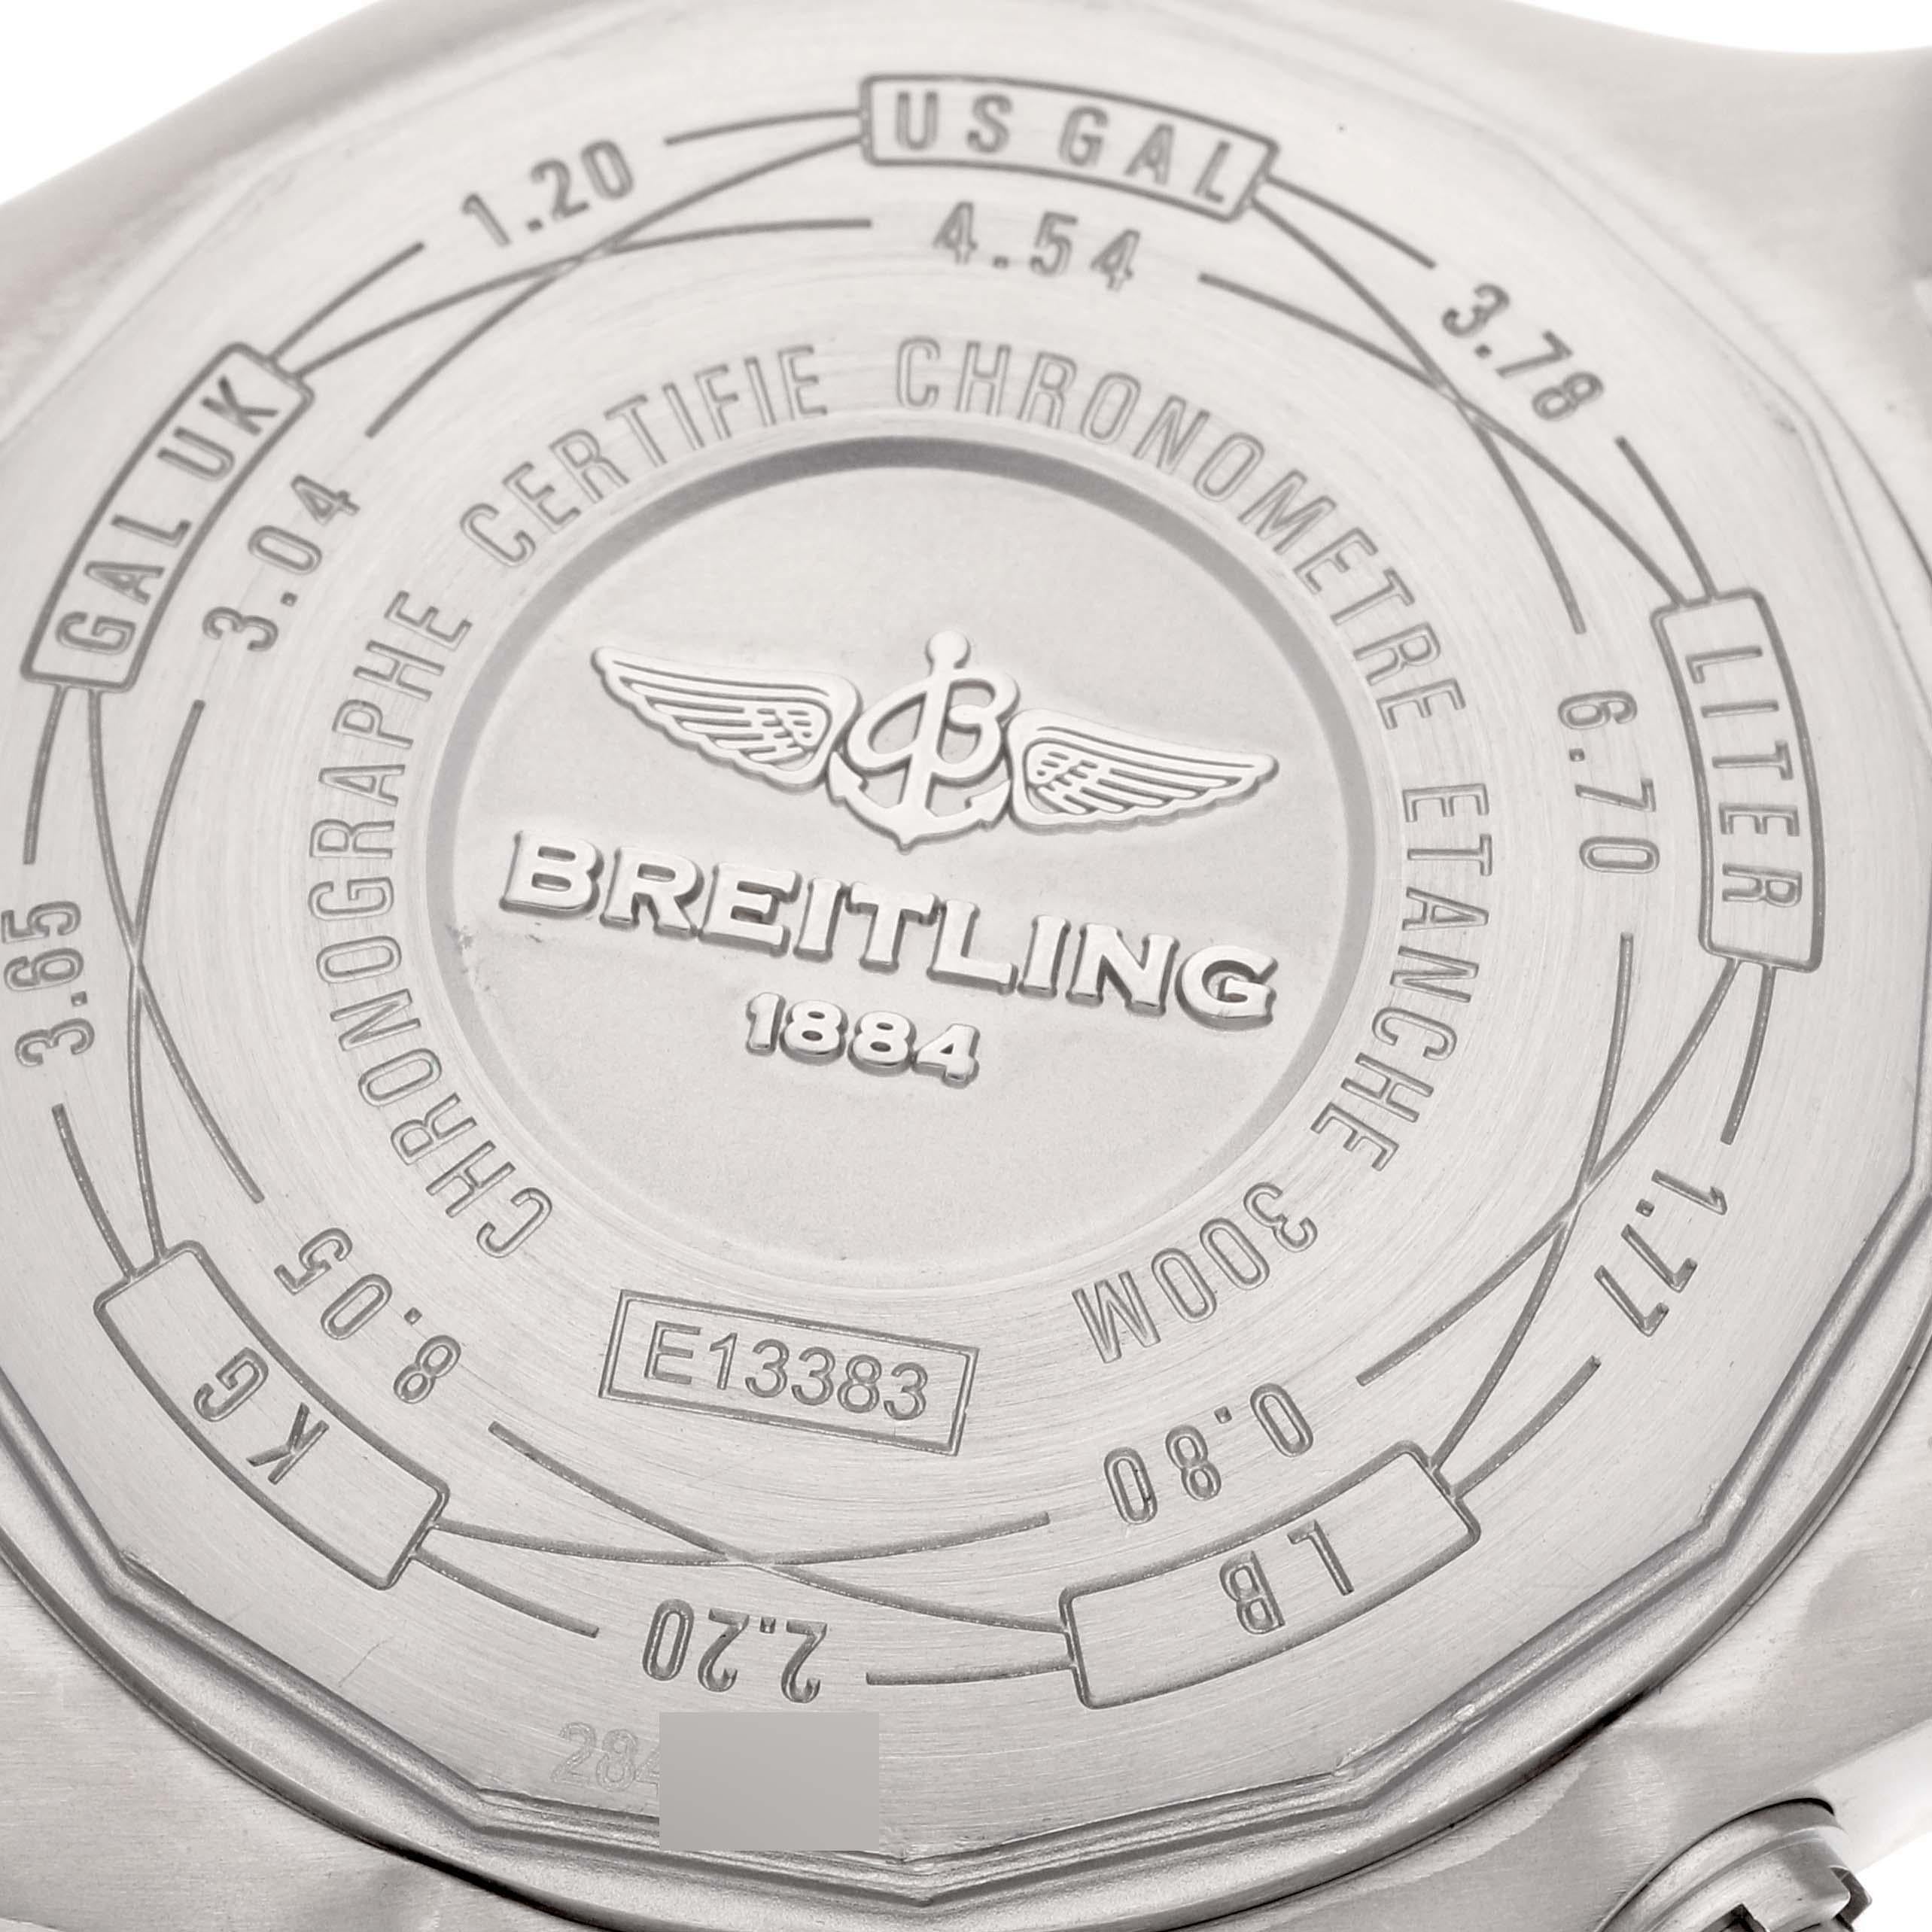 Breitling Avenger Bandit Chronograph Grey Dial Titanium Mens Watch E13383 3